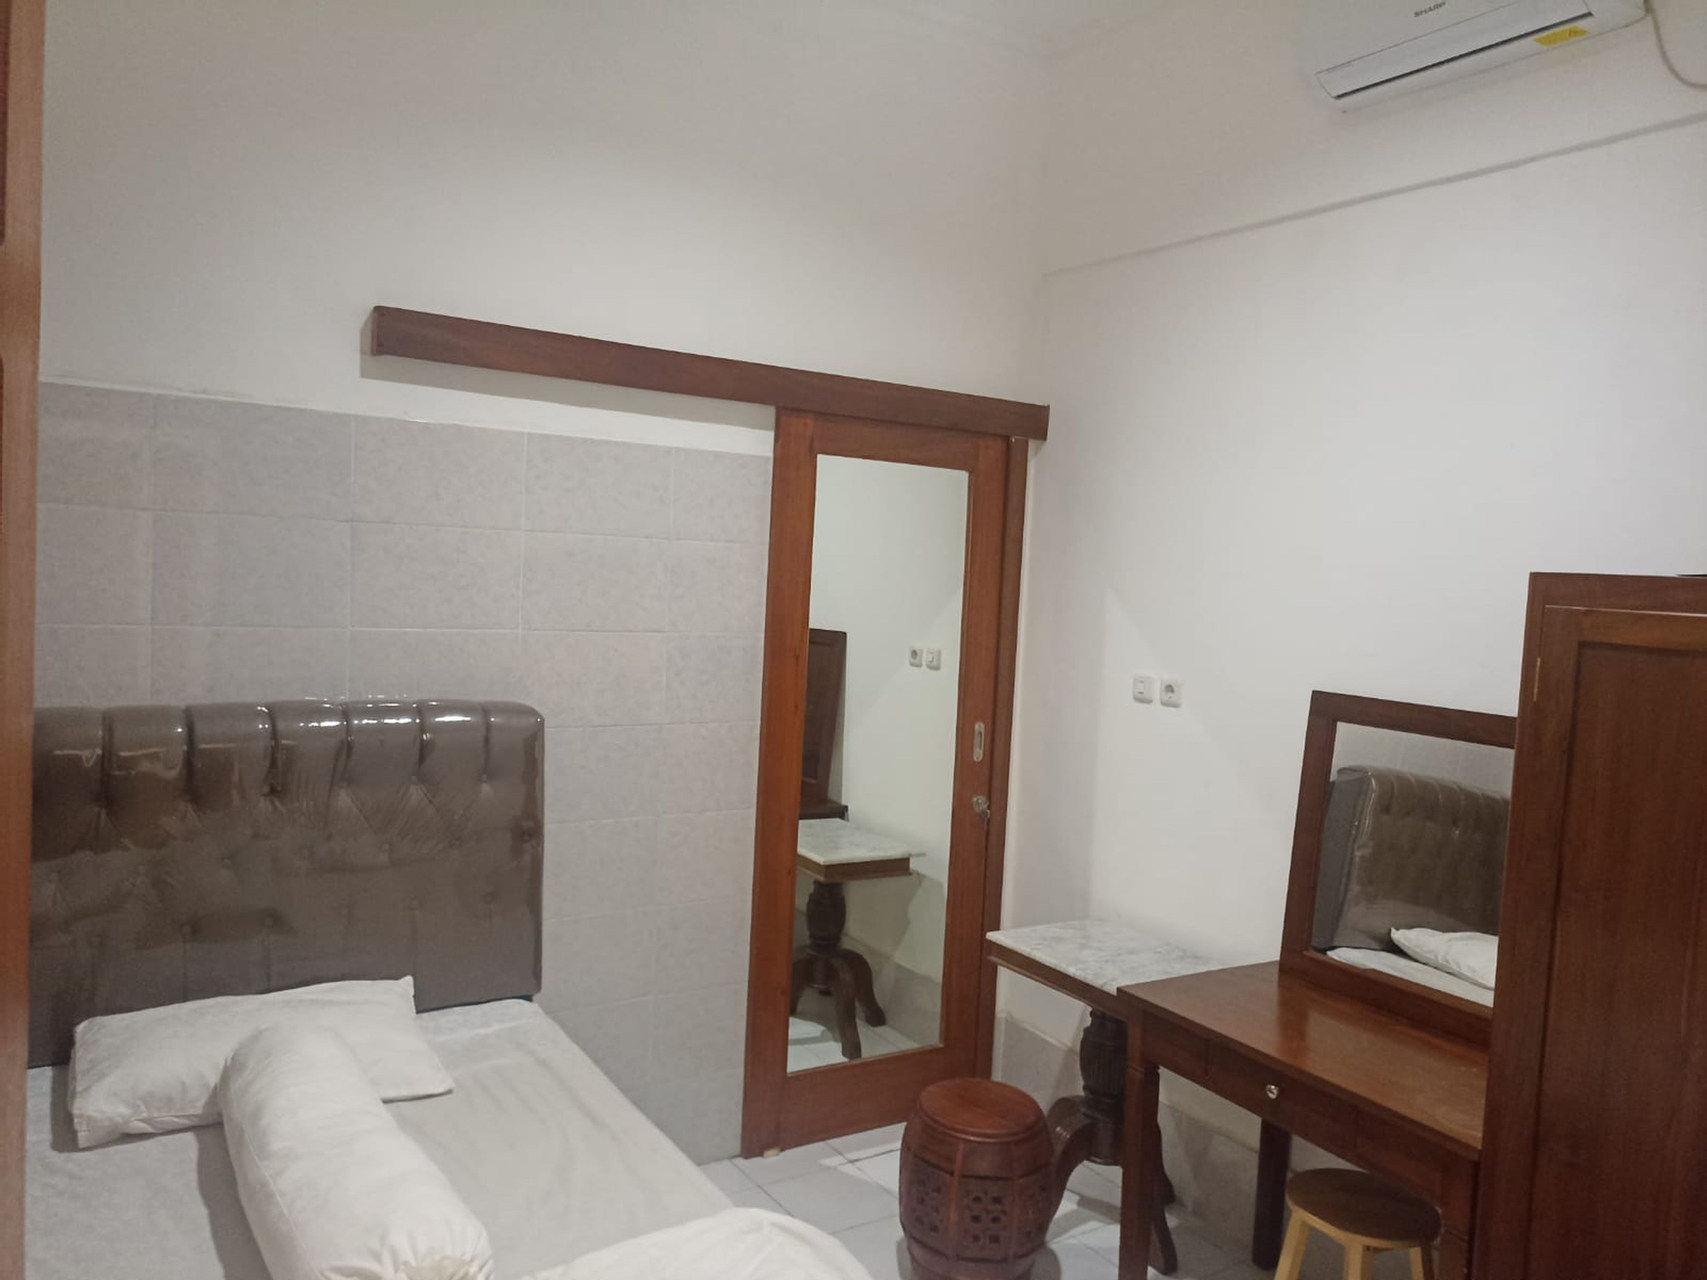 Bedroom 2, Gading Kemuning Guest House, Palembang